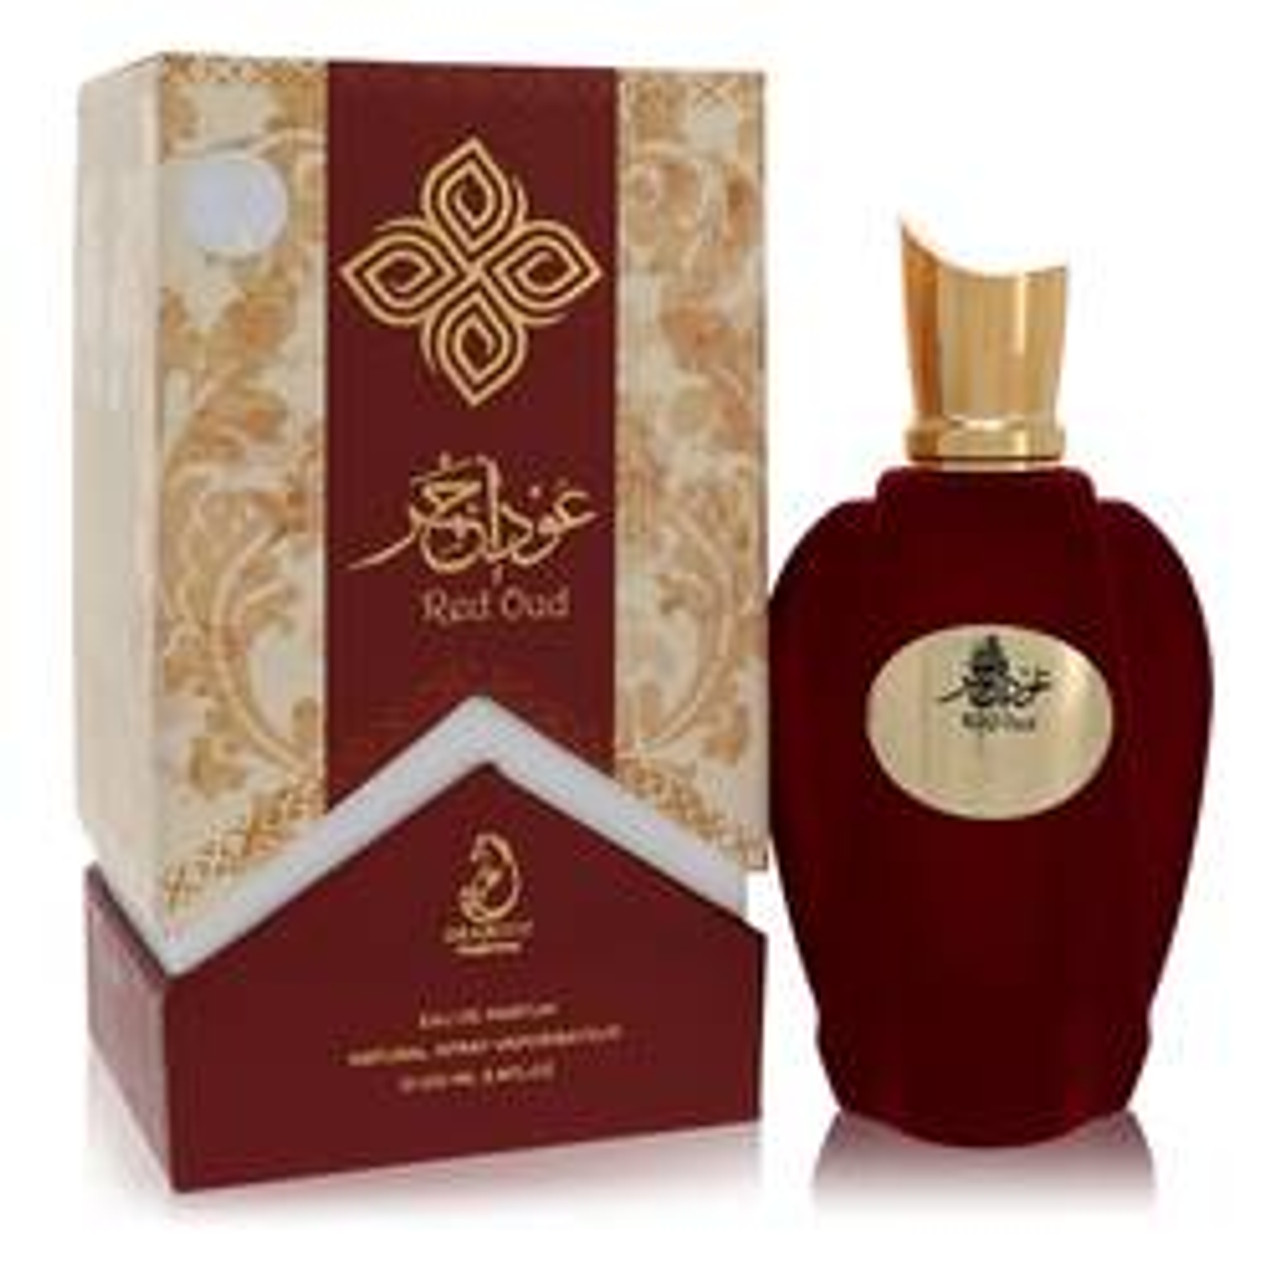 Arabiyat Prestige Red Oud Perfume By Arabiyat Prestige Eau De Parfum Spray (Unisex) 3.4 oz for Women - [From 100.00 - Choose pk Qty ] - *Ships from Miami